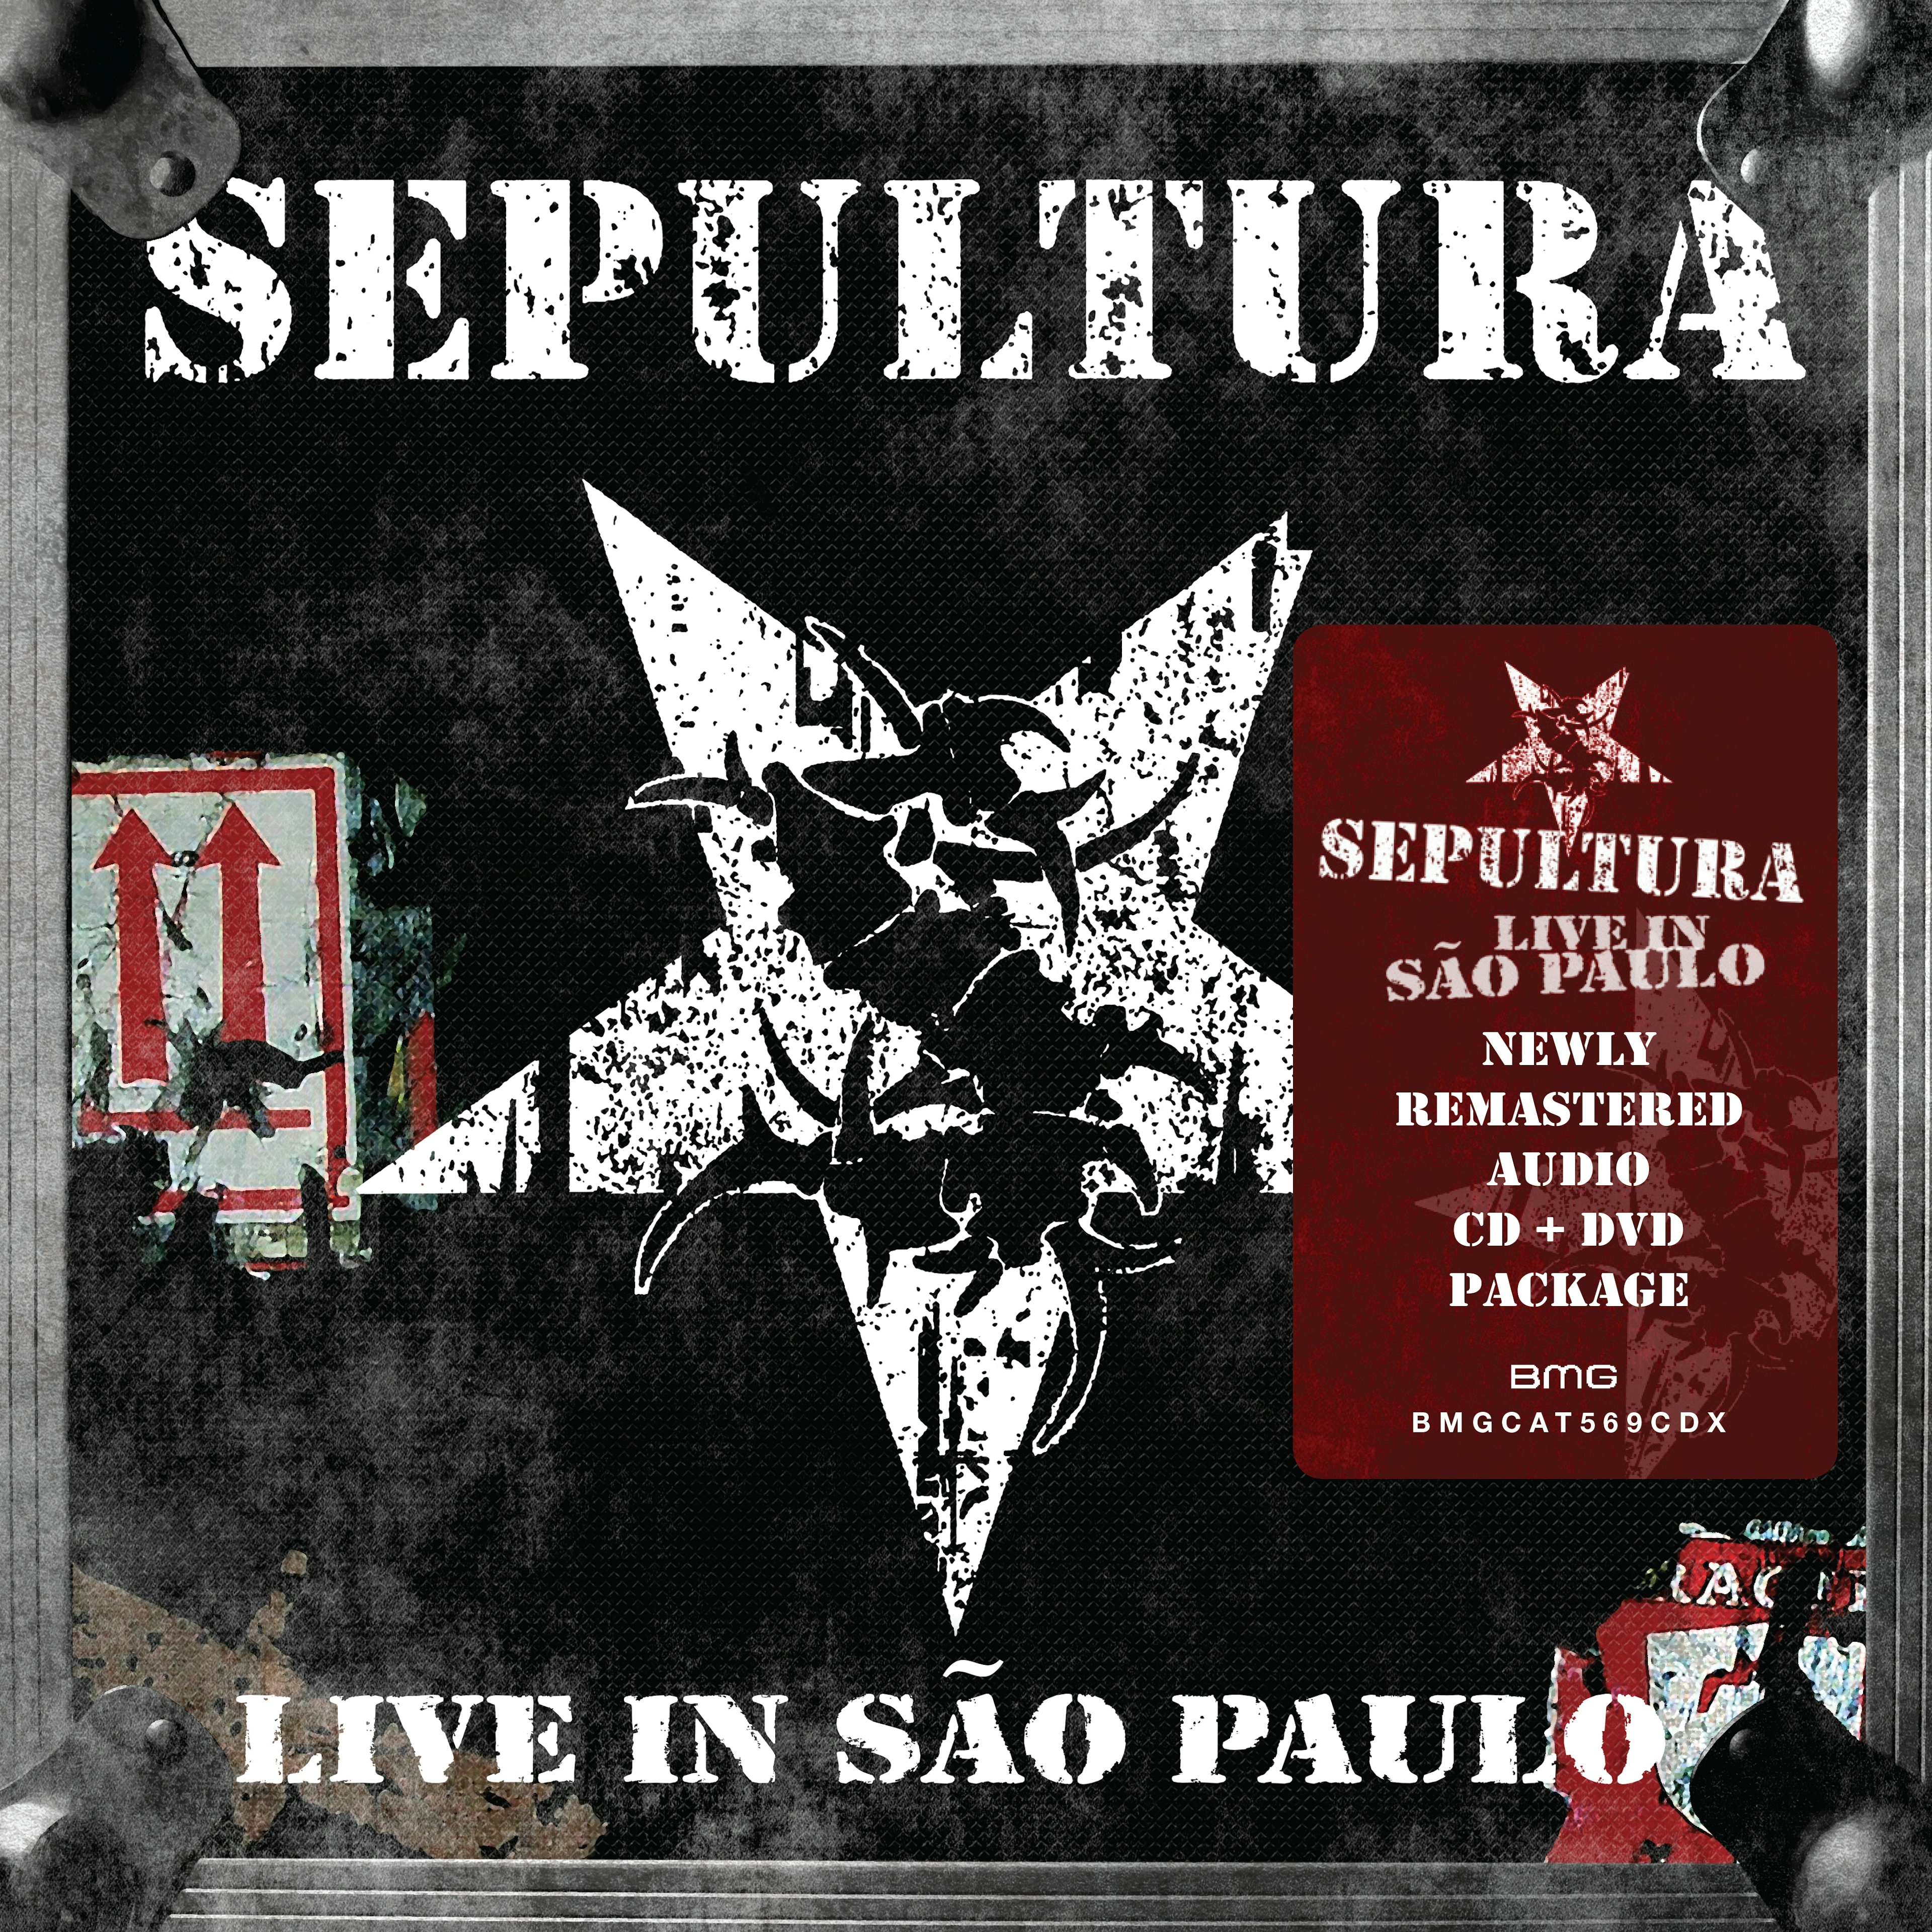 Album artwork for Album artwork for Live in São Paulo by Sepultura by Live in São Paulo - Sepultura